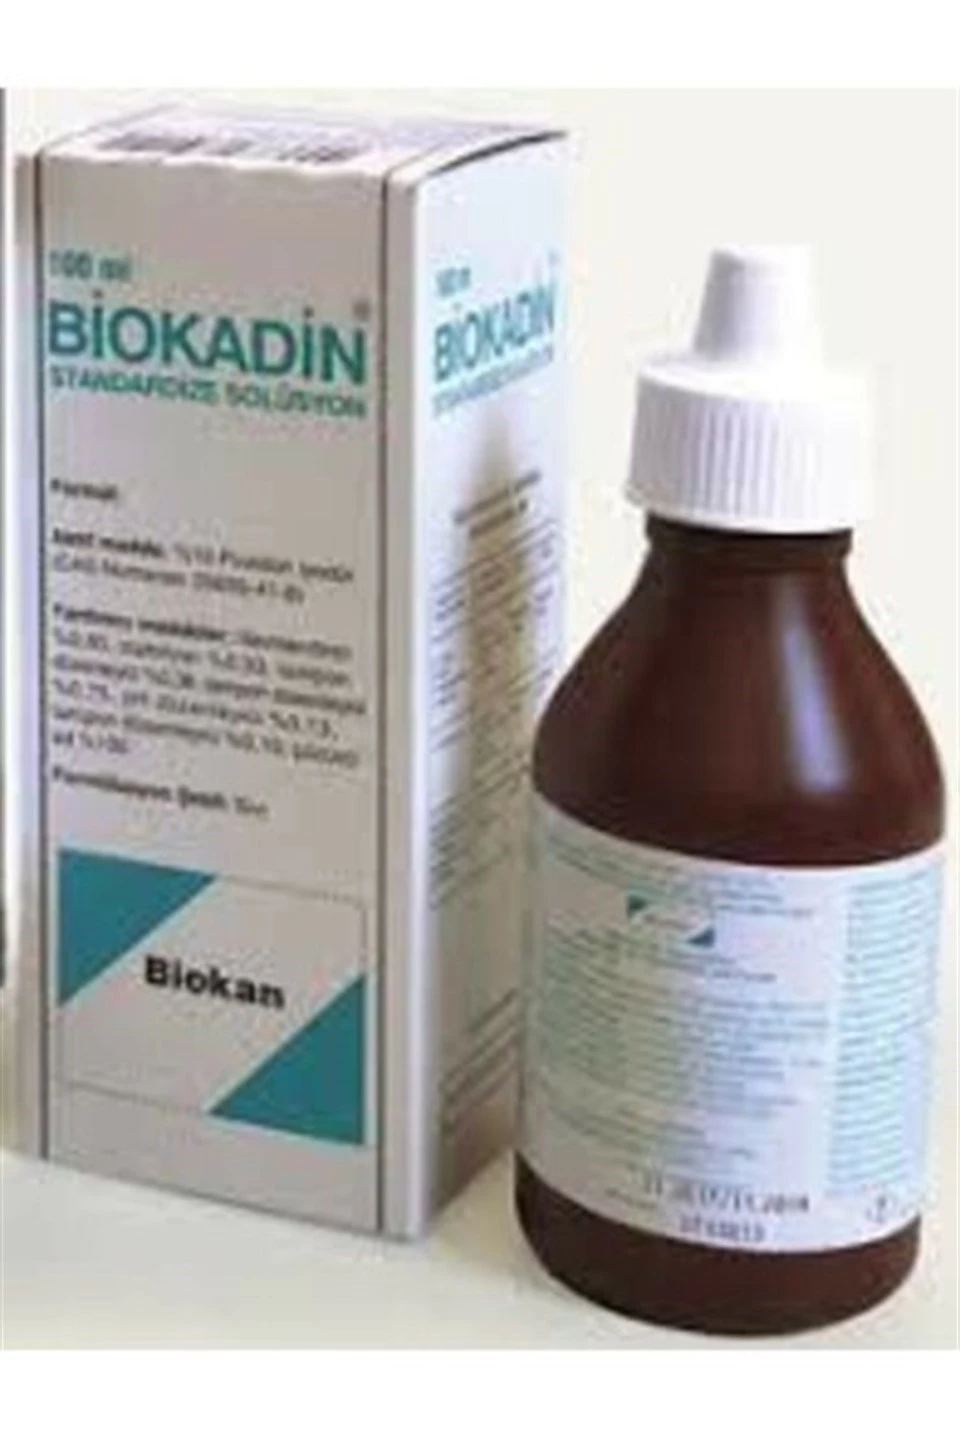 Biokats Biokadin Standardize Solüsyon 30 Ml.